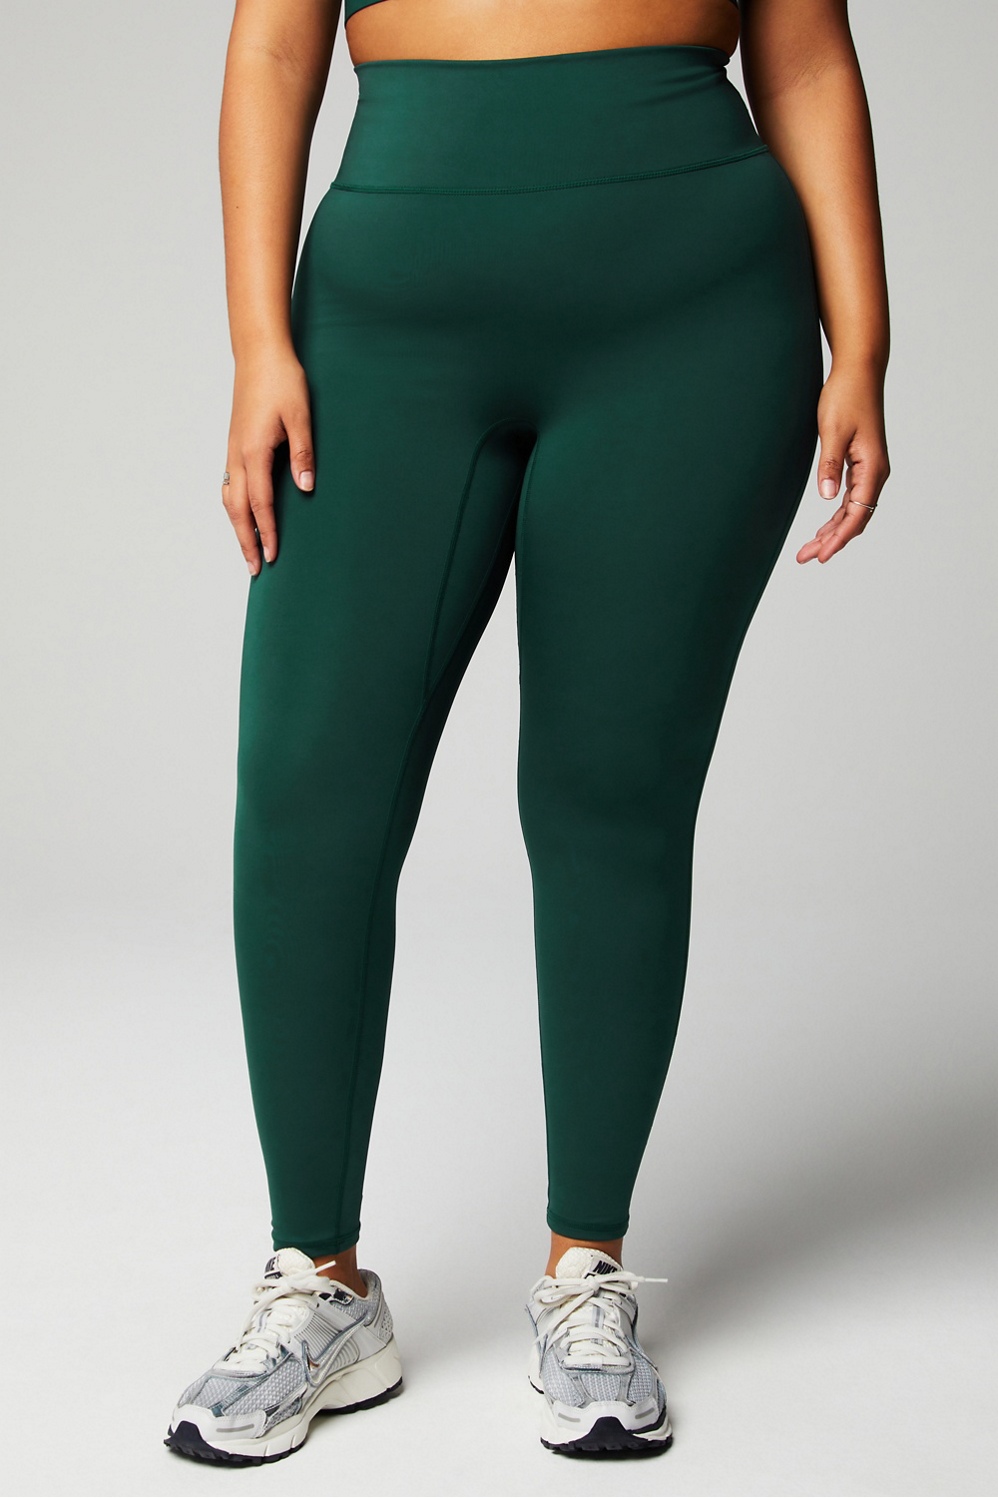 Galaxy Leggings Khaki Green Yoga Pants Bleach Dyed by Hand Women's Men's  Unisex Ladies Comfy Stretch 